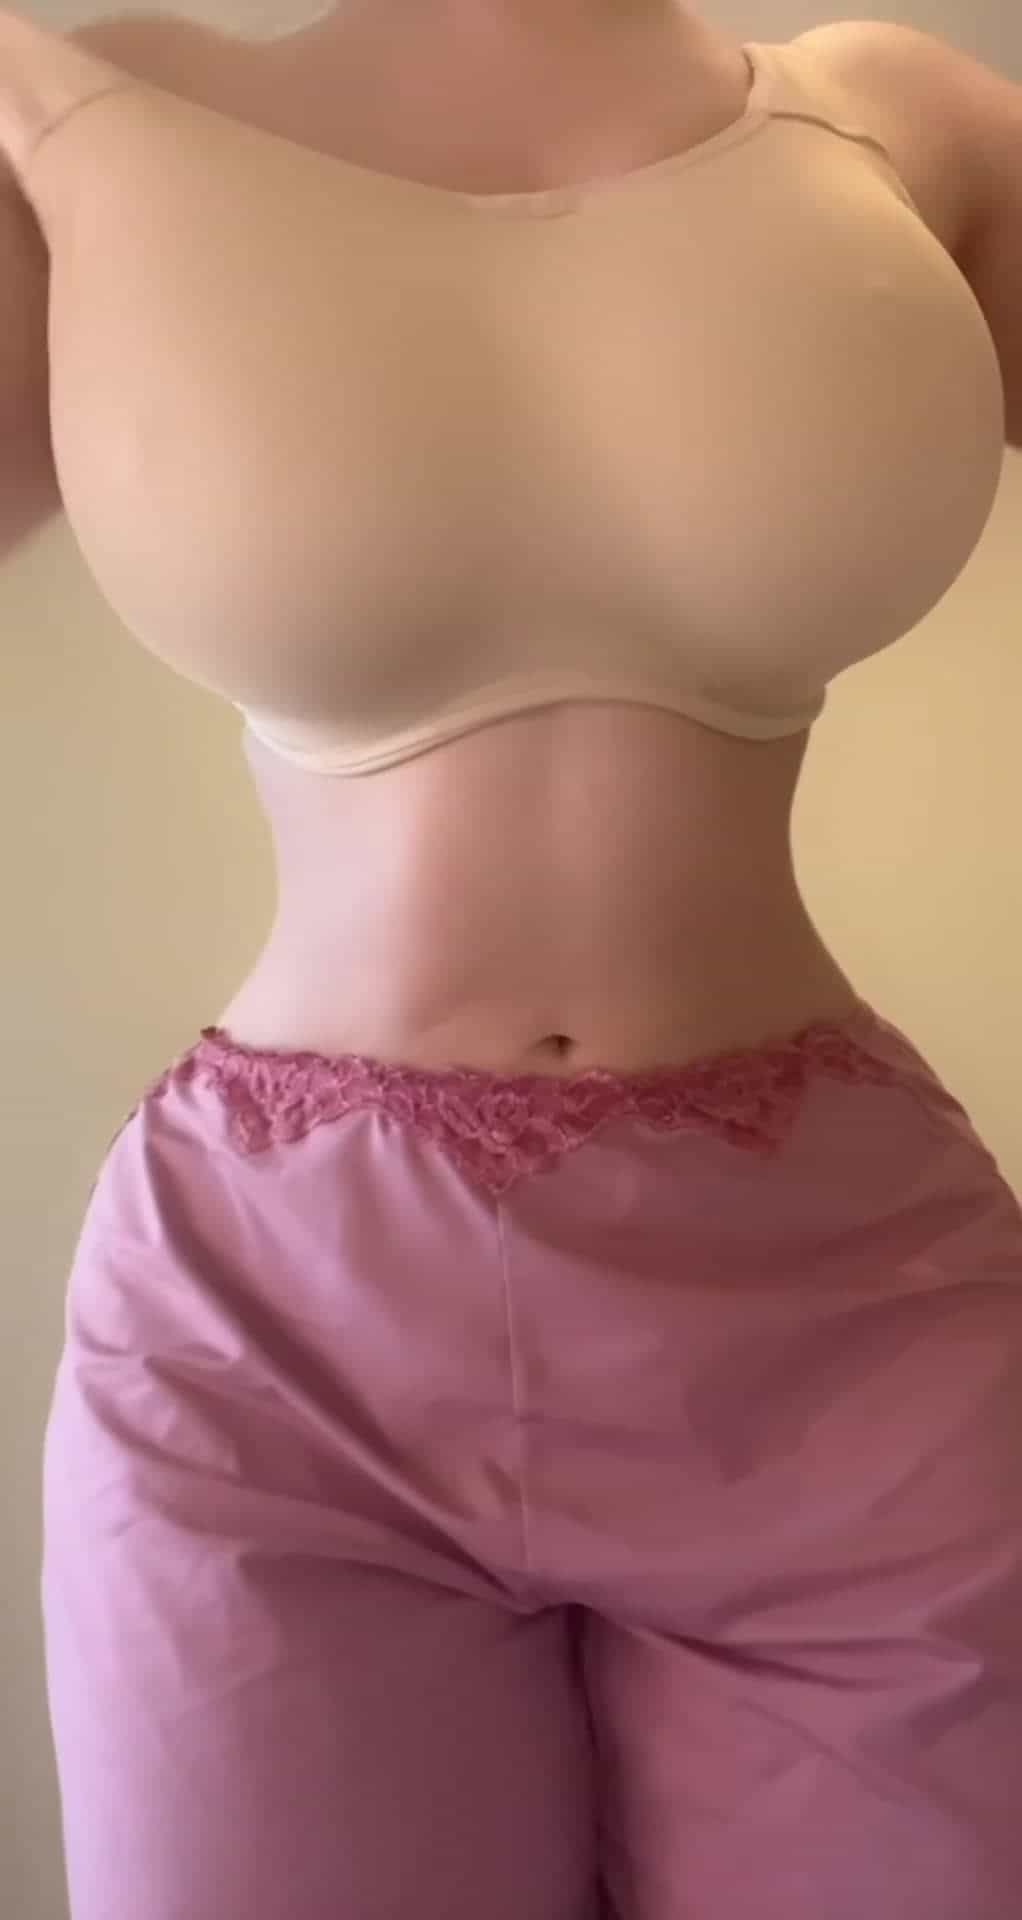 Huge natural tits (reveal)